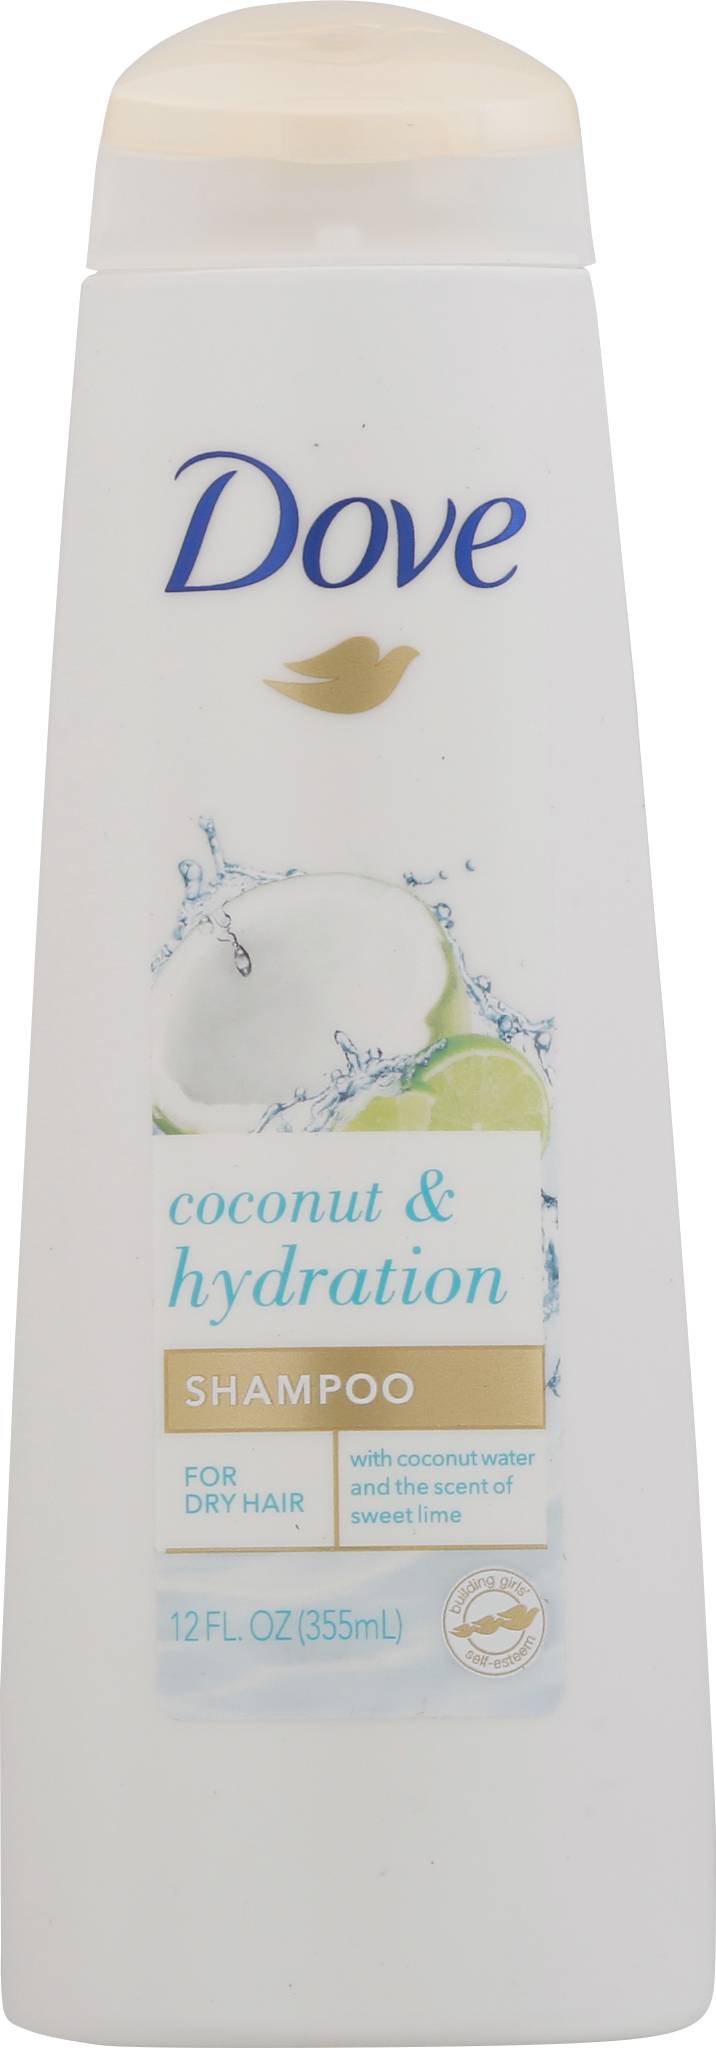 Dove Coconut & Hydration Shampoo (12 fl oz)